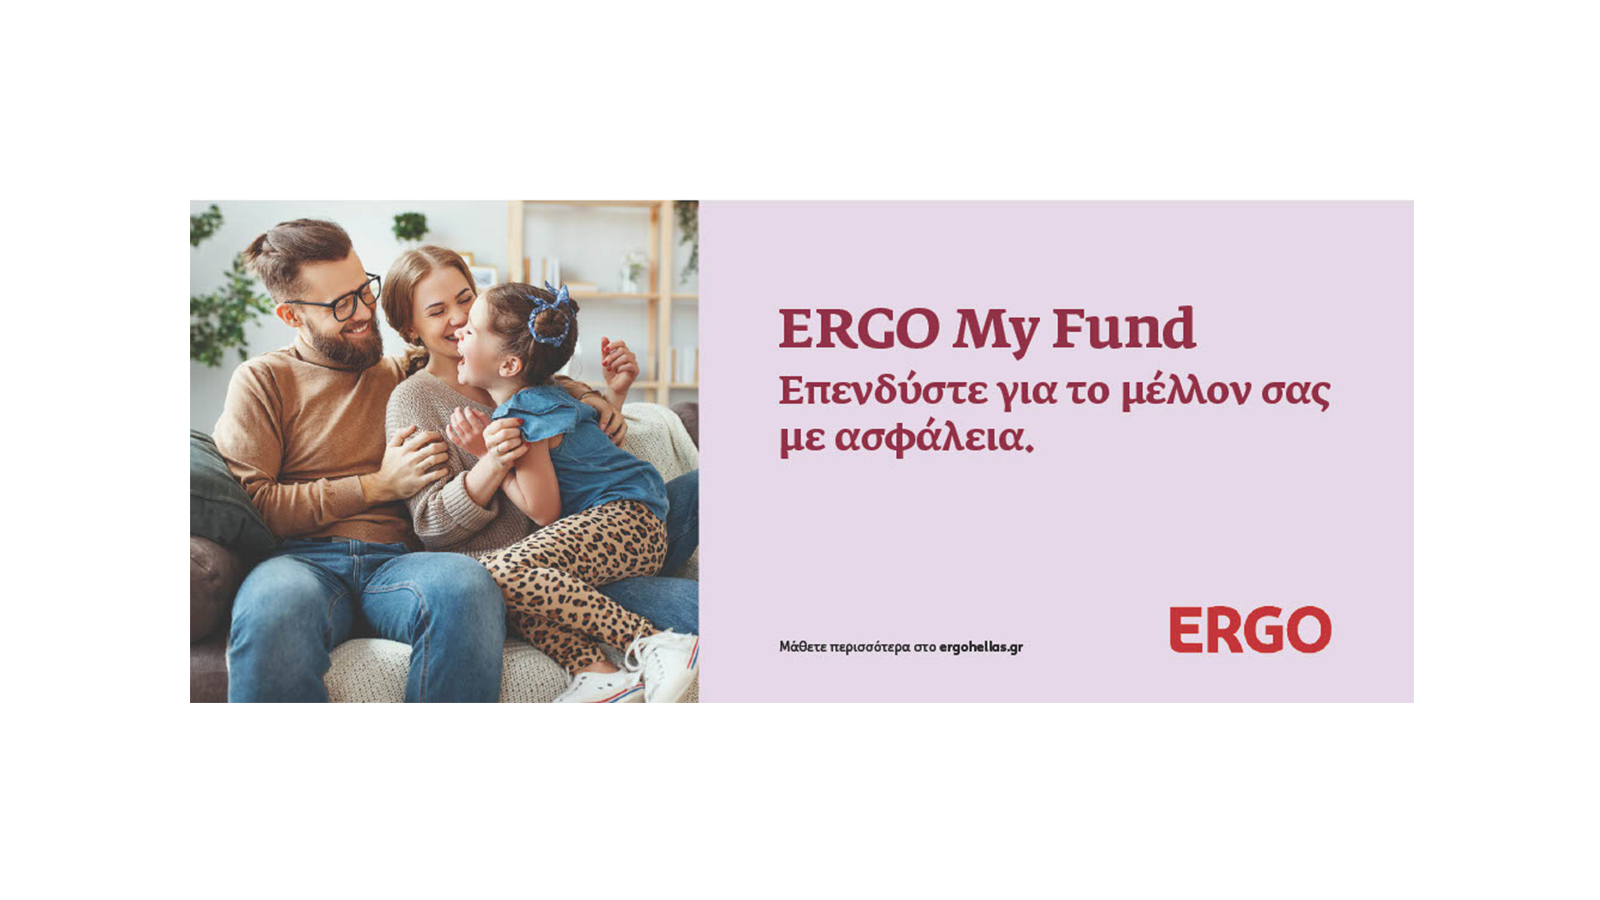 ERGO My Fund, τα νέα καινοτόμα Unit Linked προϊόντα της ERGO